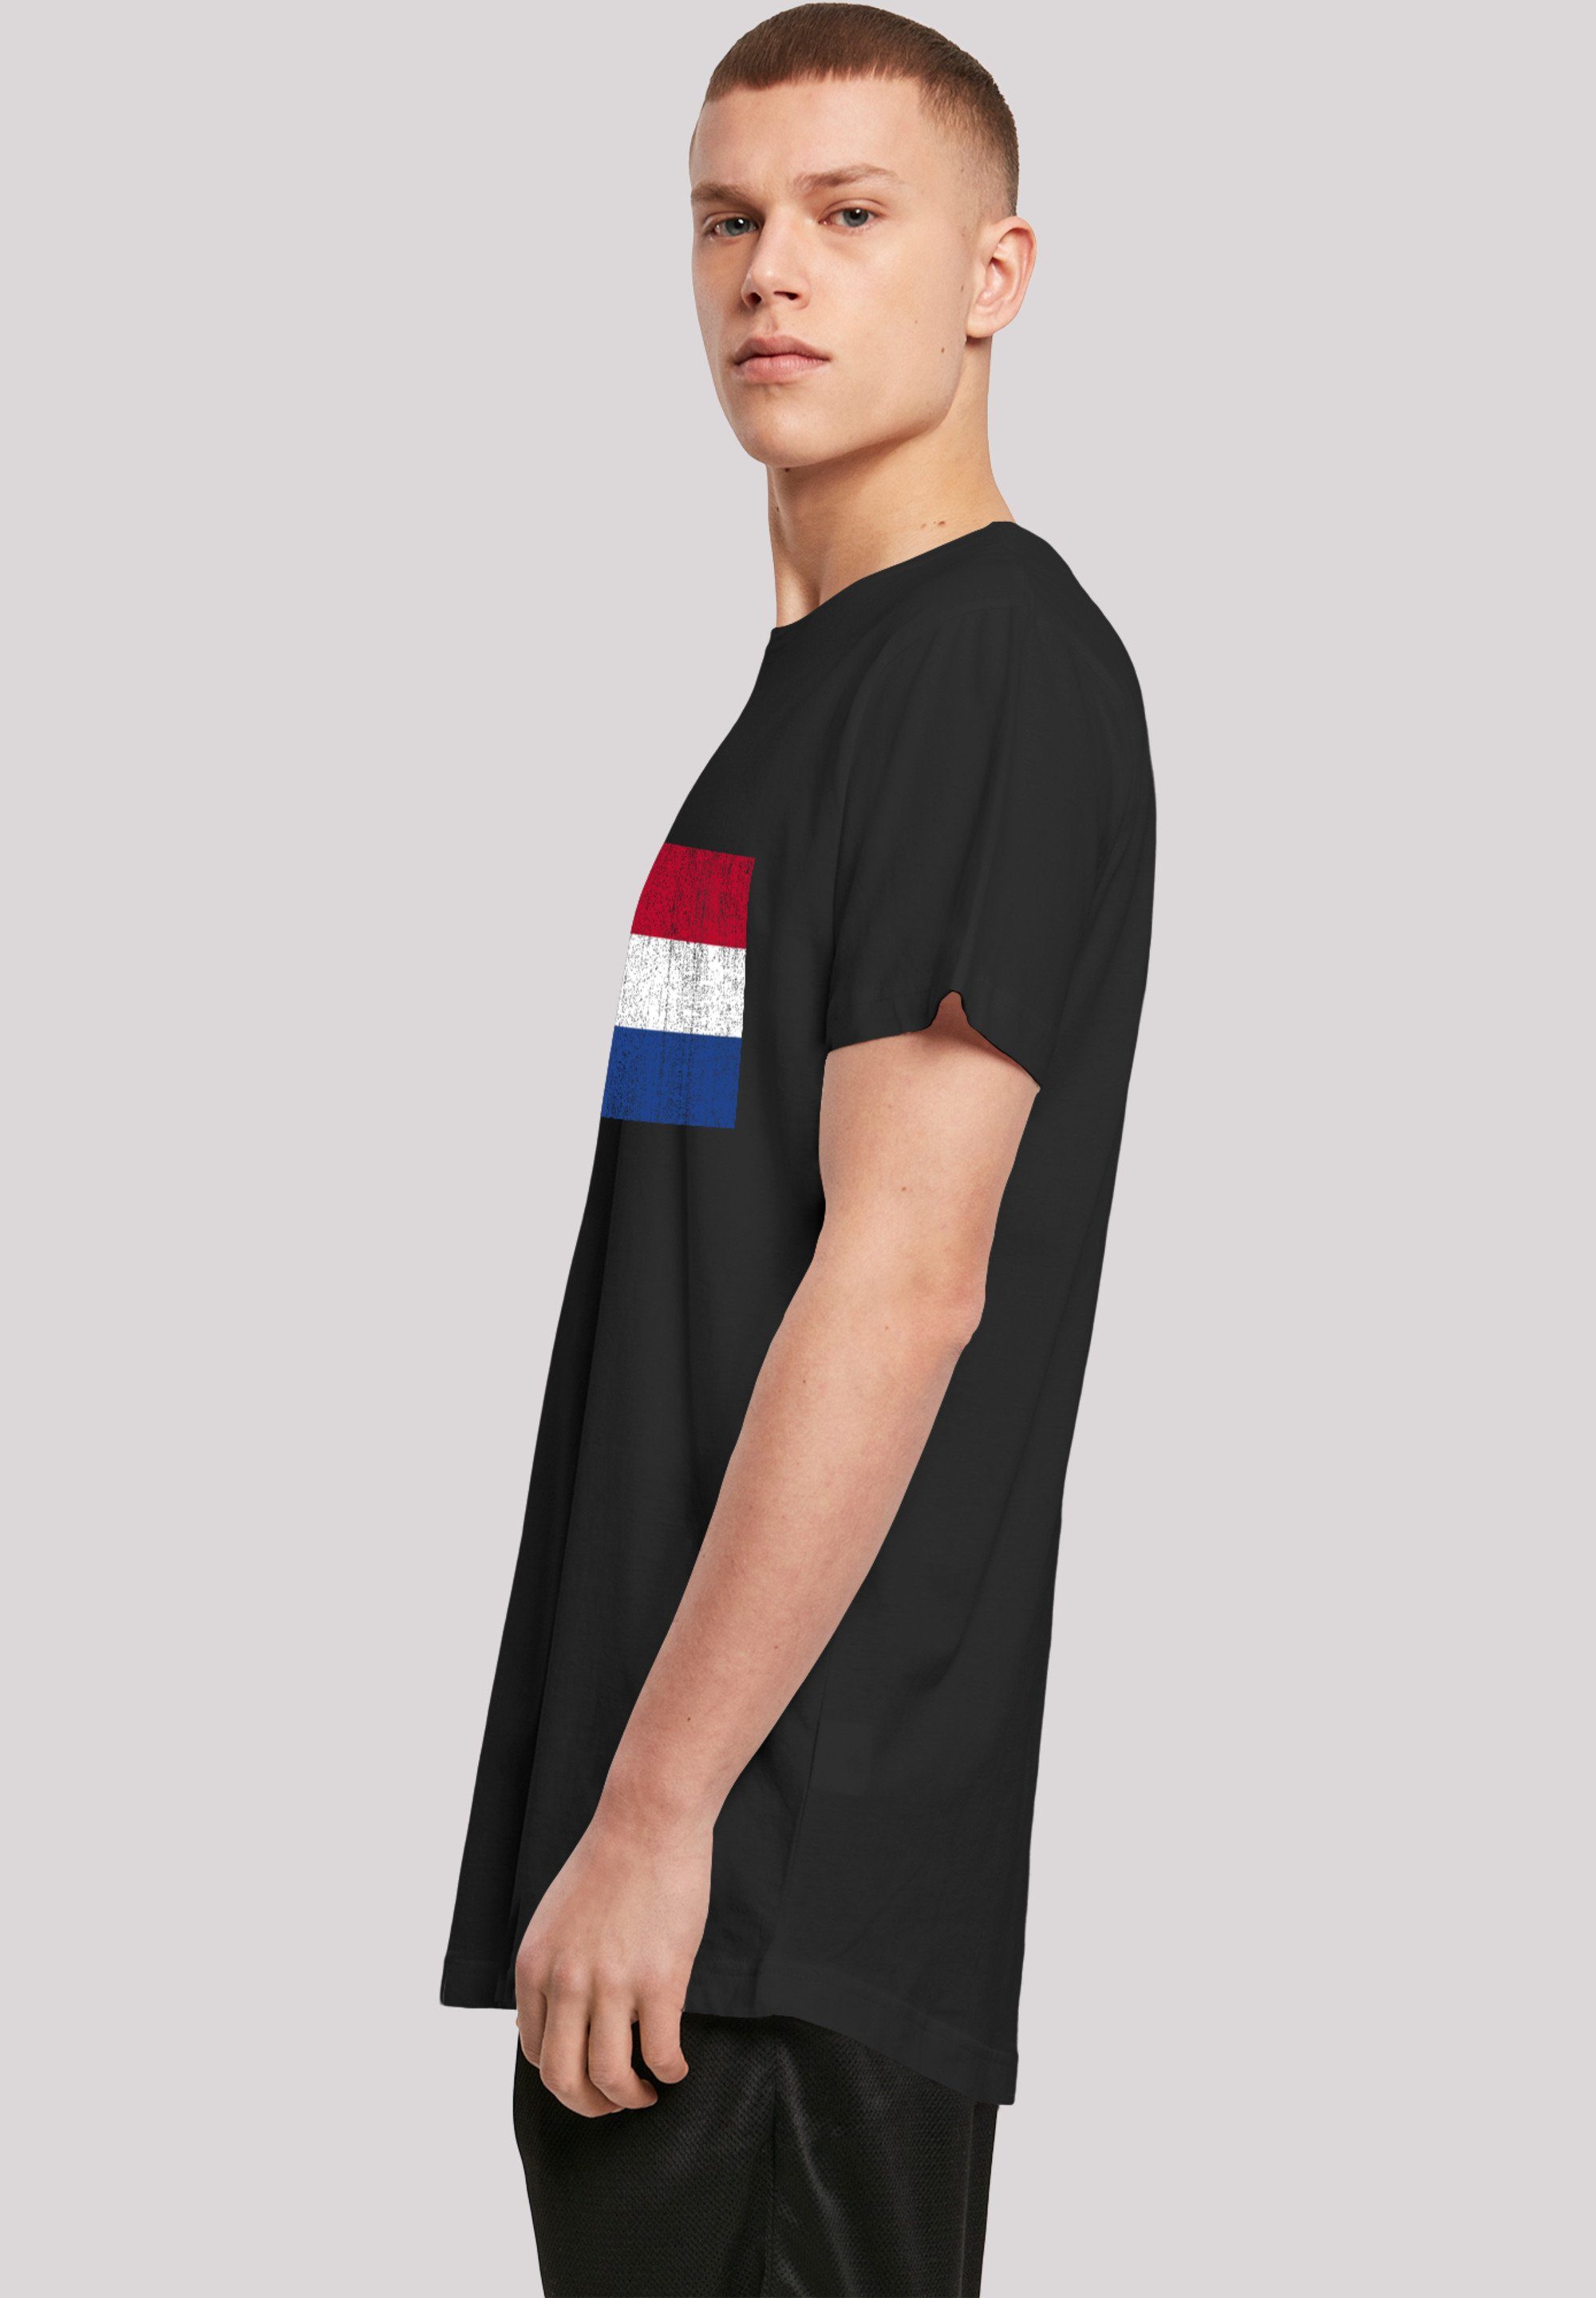 schwarz T-Shirt distressed Flagge Print Holland Netherlands NIederlande F4NT4STIC